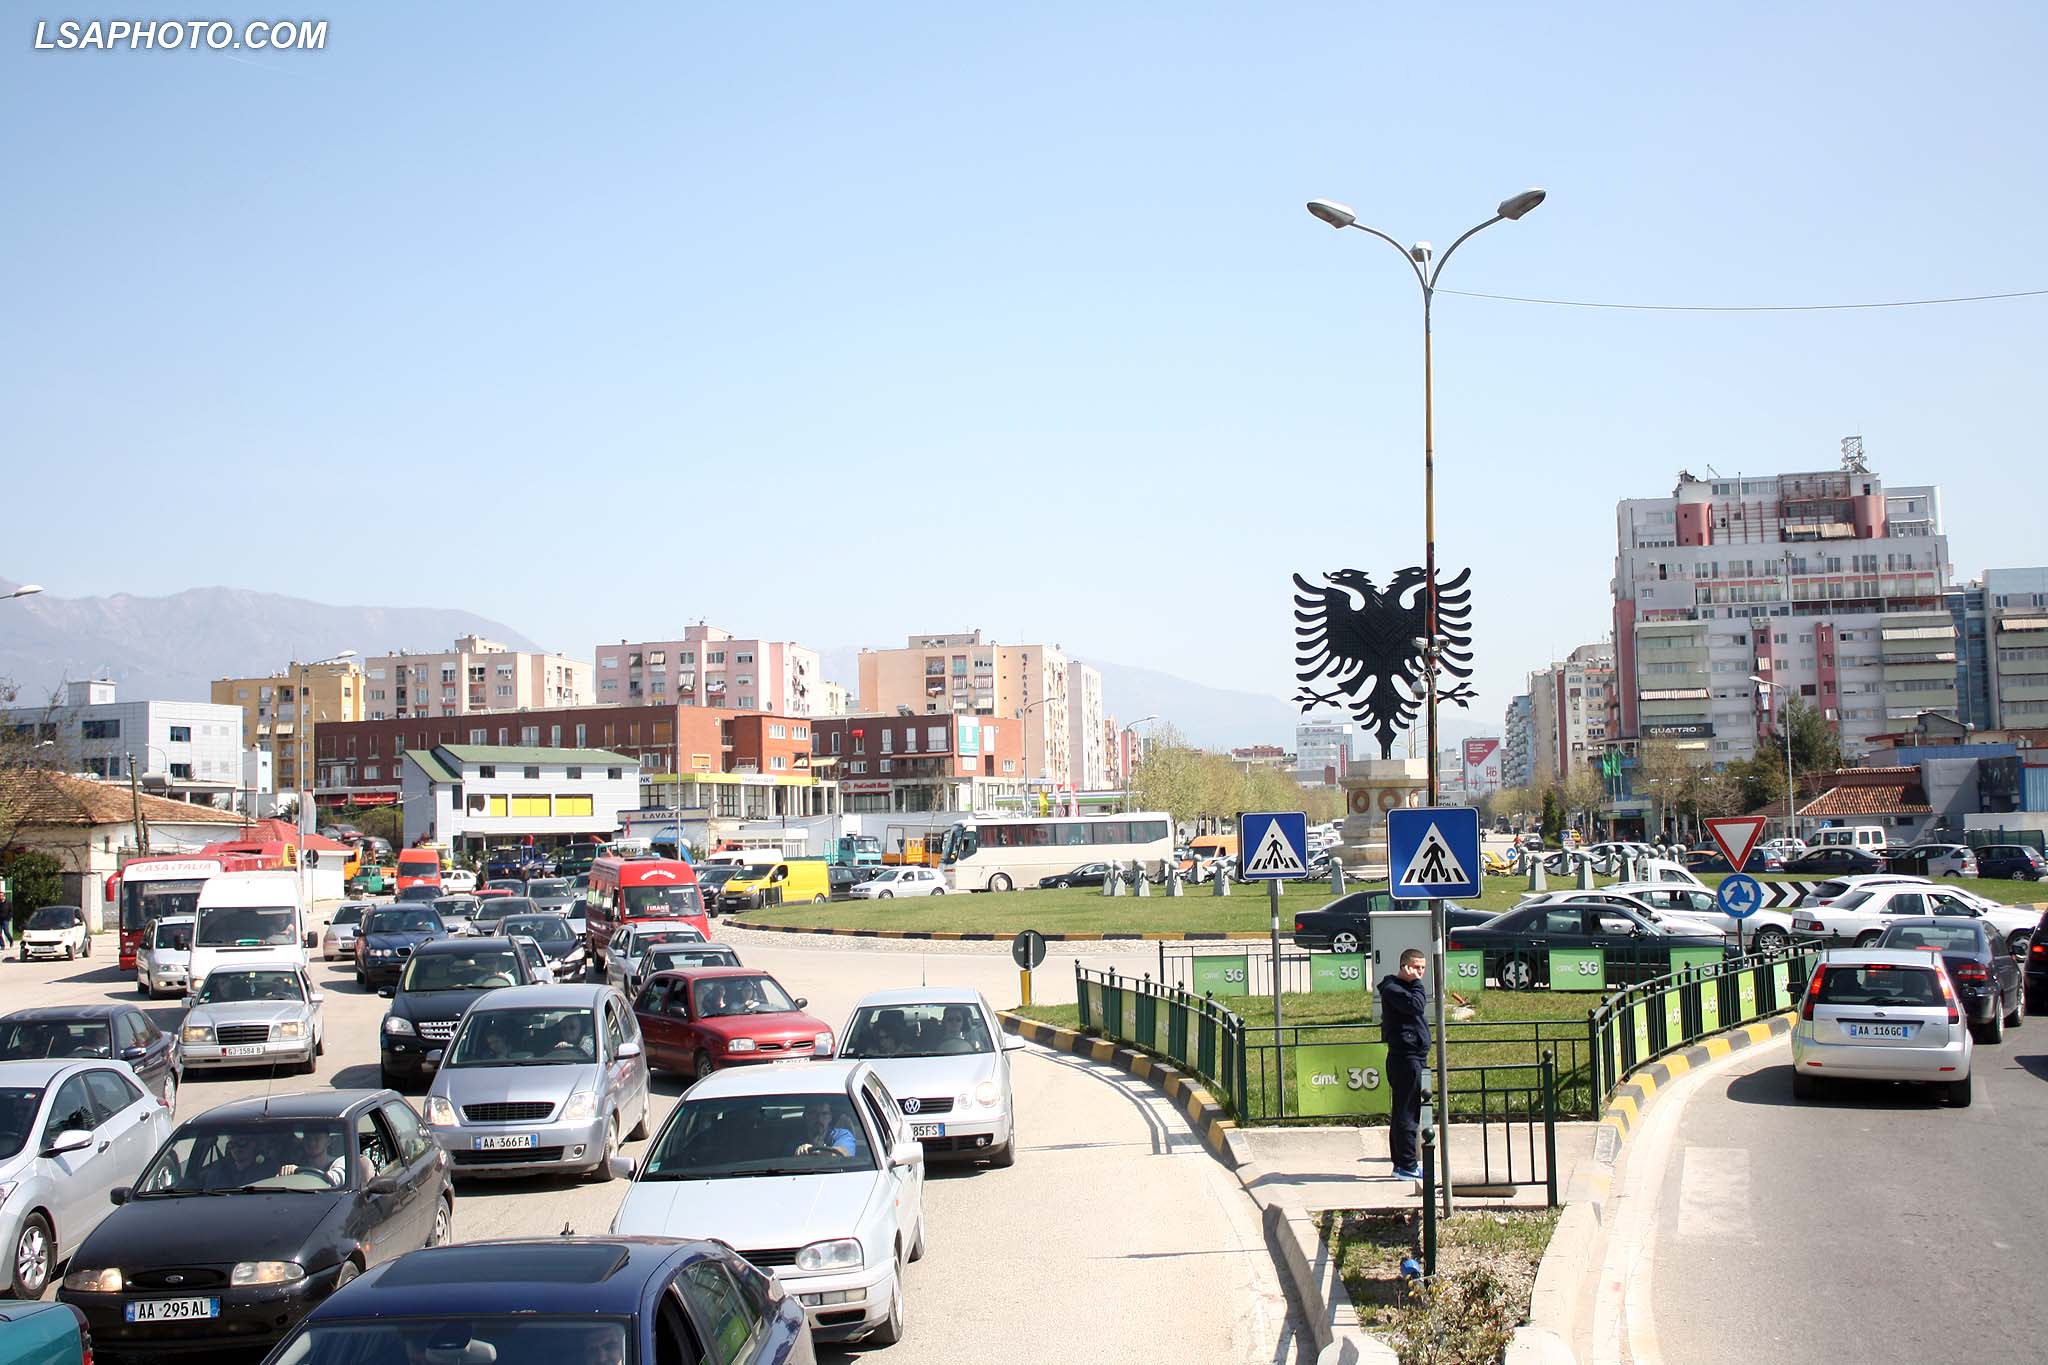 Trafik i renduar i makinave prane sheshit Shqiponja, pas bllokimt te autostrades Tirana-Durres, e cila do te asfaltohet ne aksin Tirane-Vore./r/n/r/nHeavy traffic near the turning of Kamez, after blocking Tirana-Durres highway.